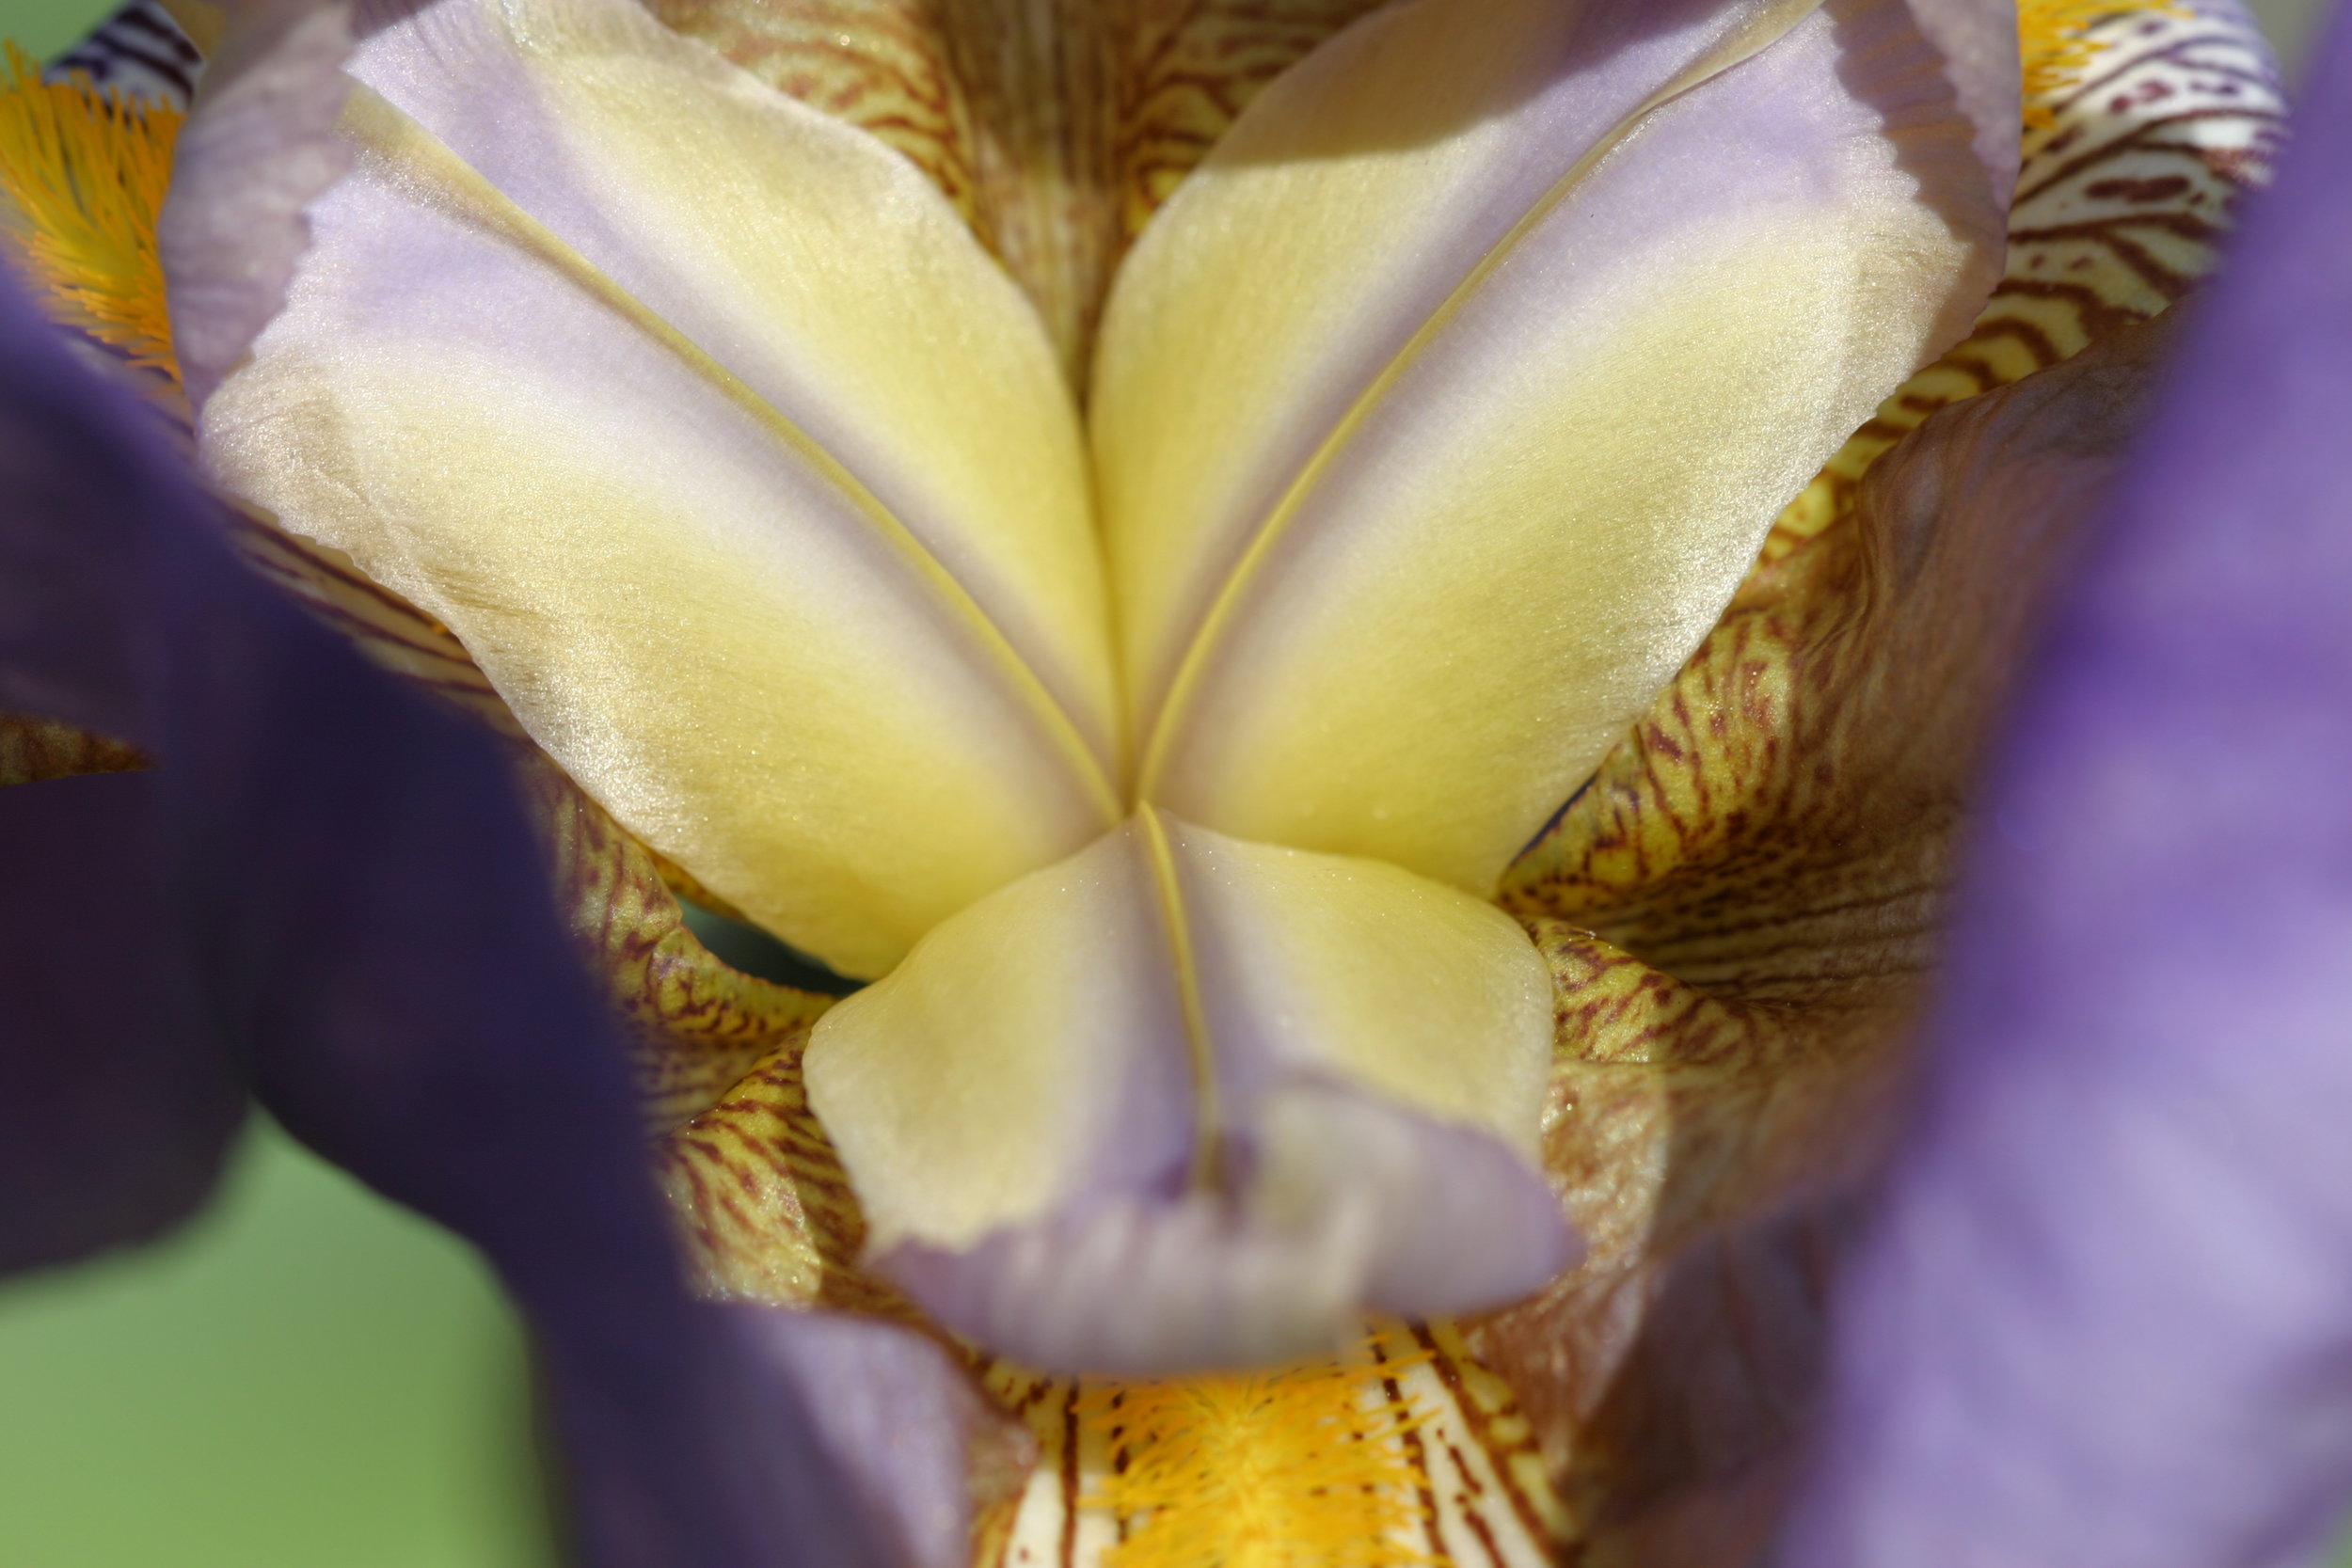 Iris in Bloom